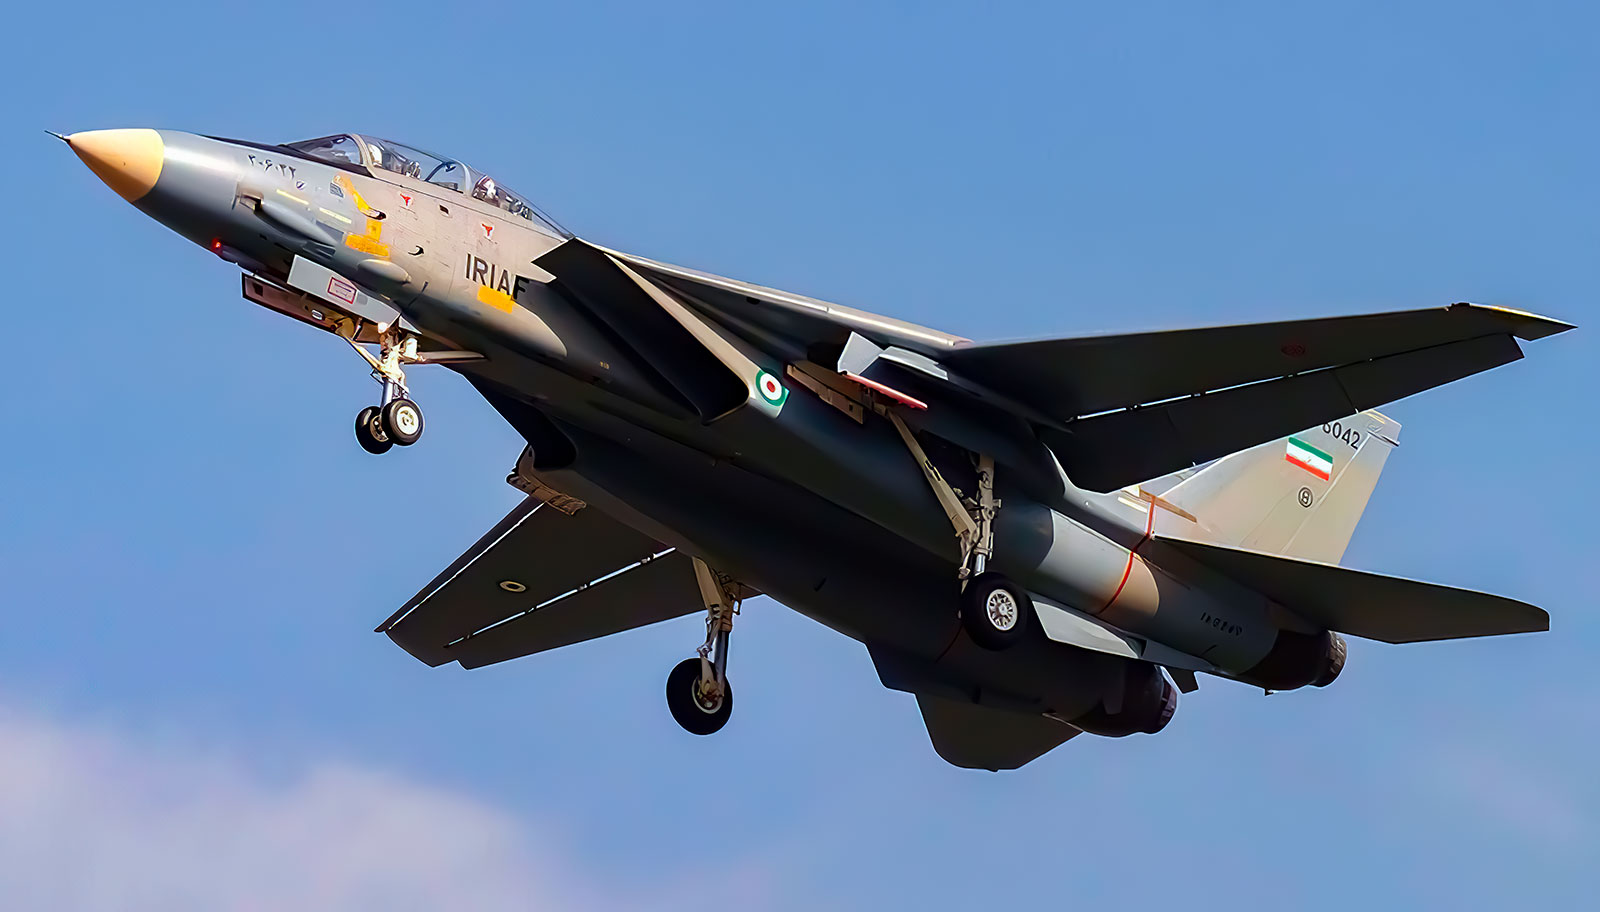 Avión de combate F-14 Tomcat iraní se estrella: pilotos sobreviven